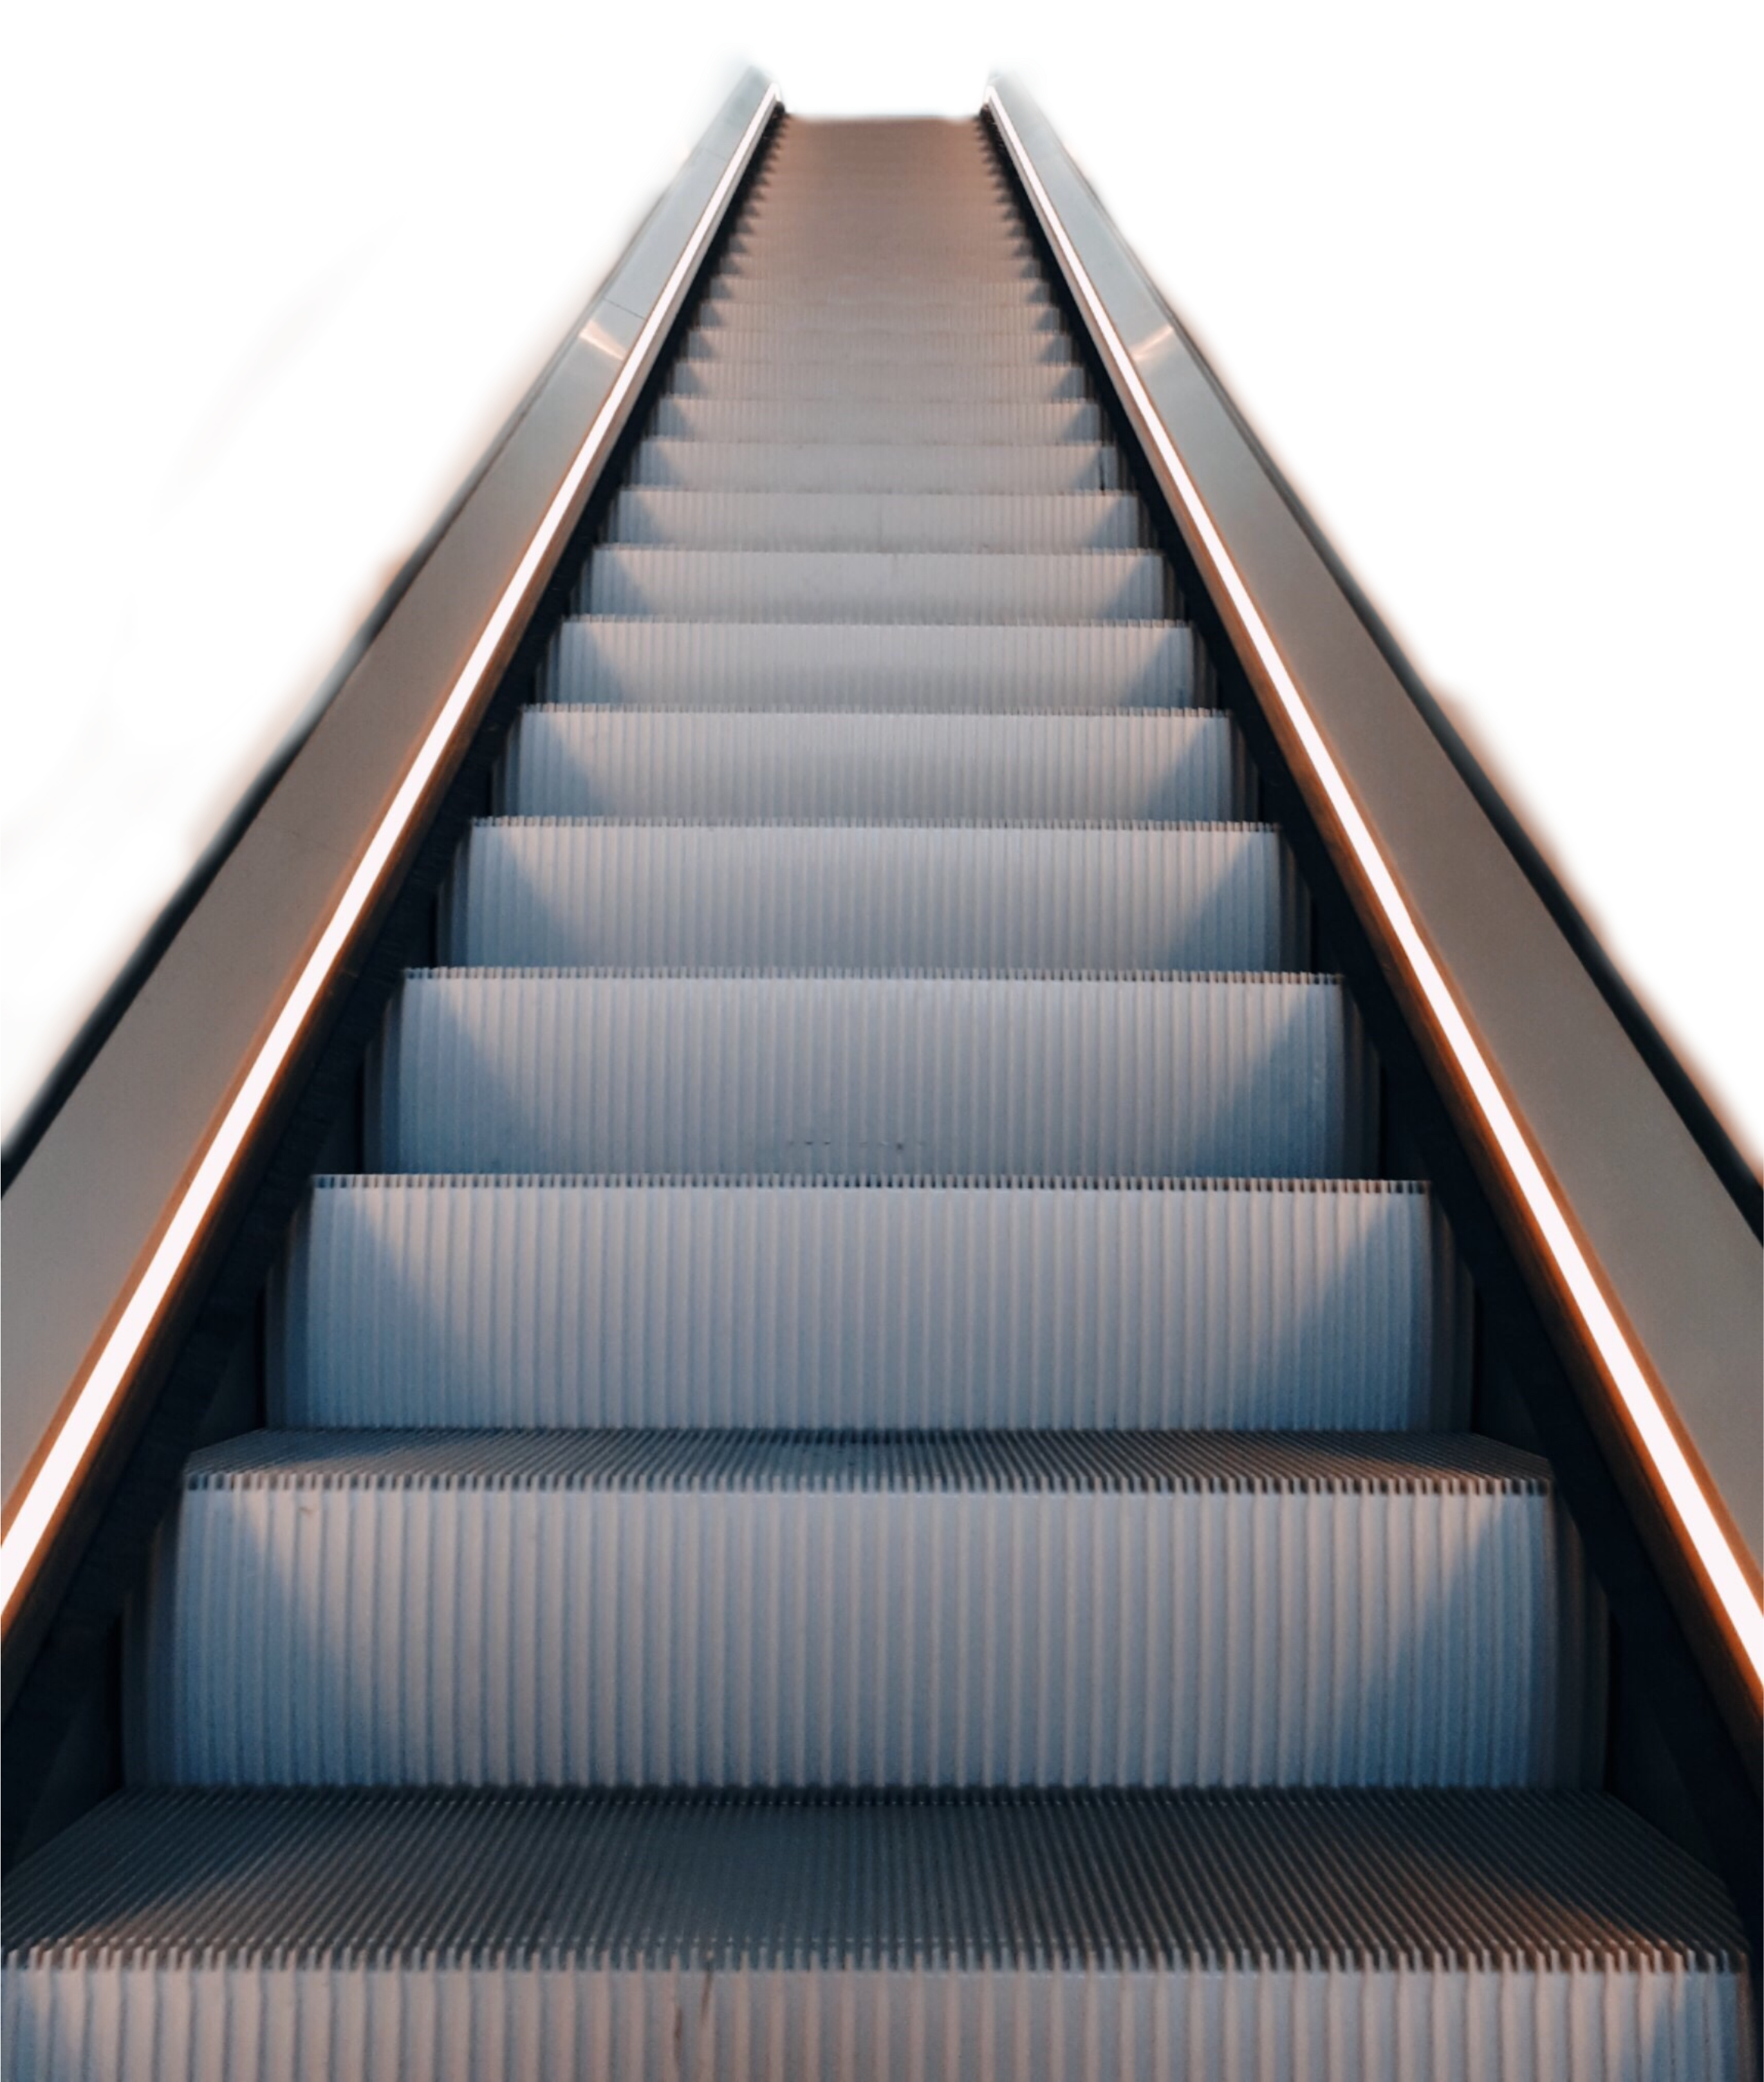 A Close Up Of An Escalator